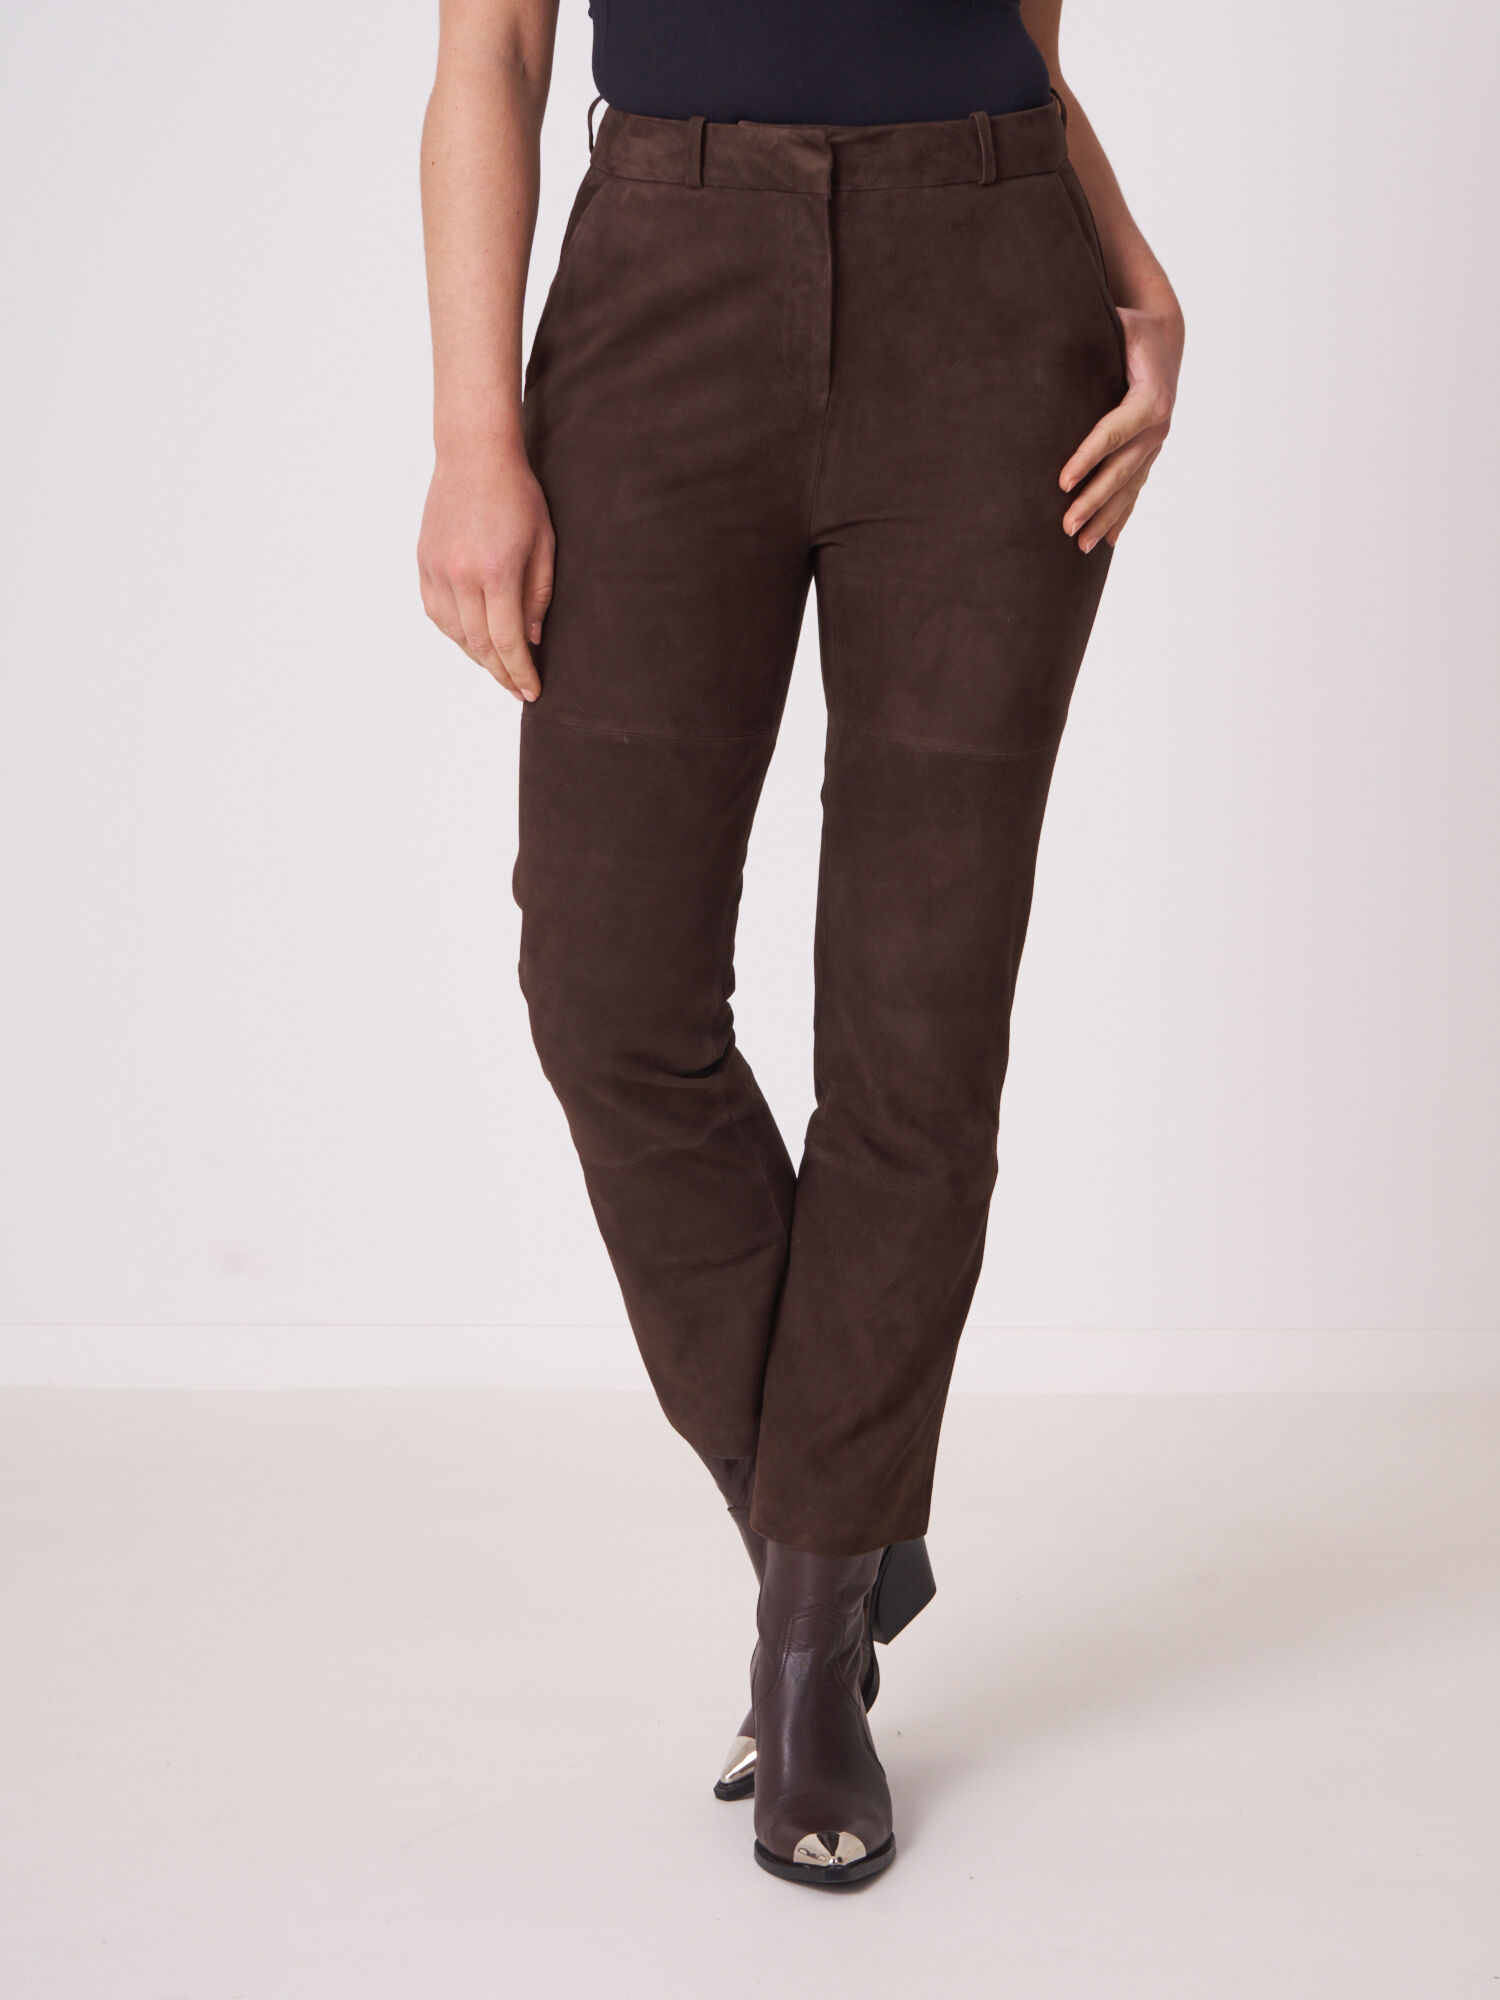 Iris von Arnim Suede leather trousers Philine Grey  Leather Pants